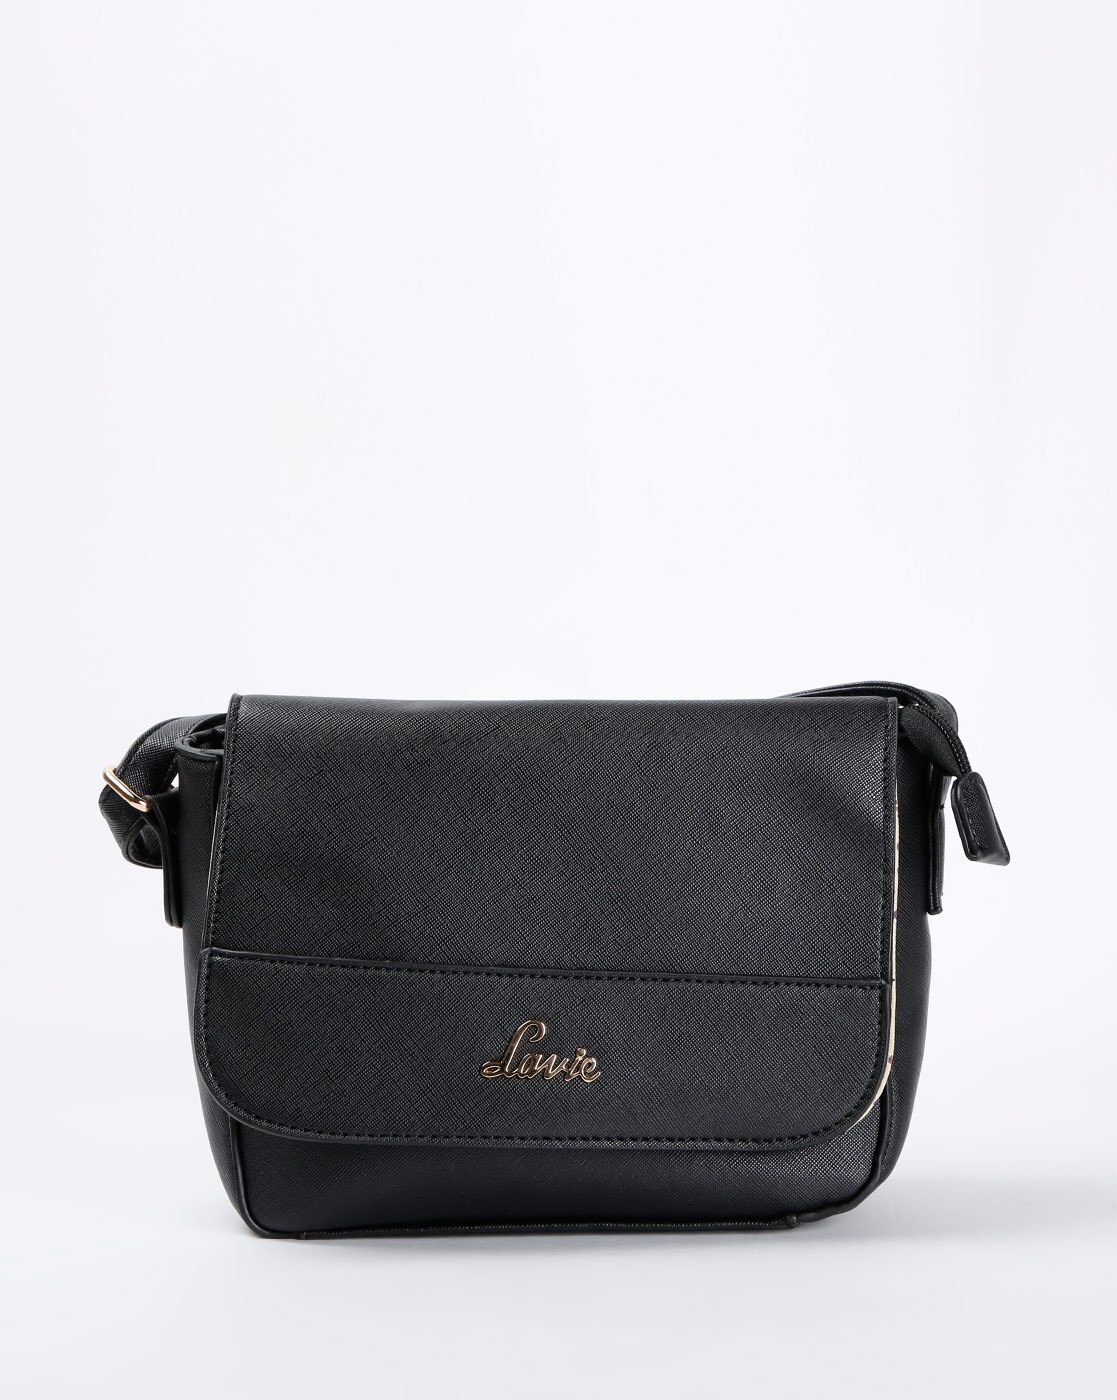 lavie cetan women's sling bag